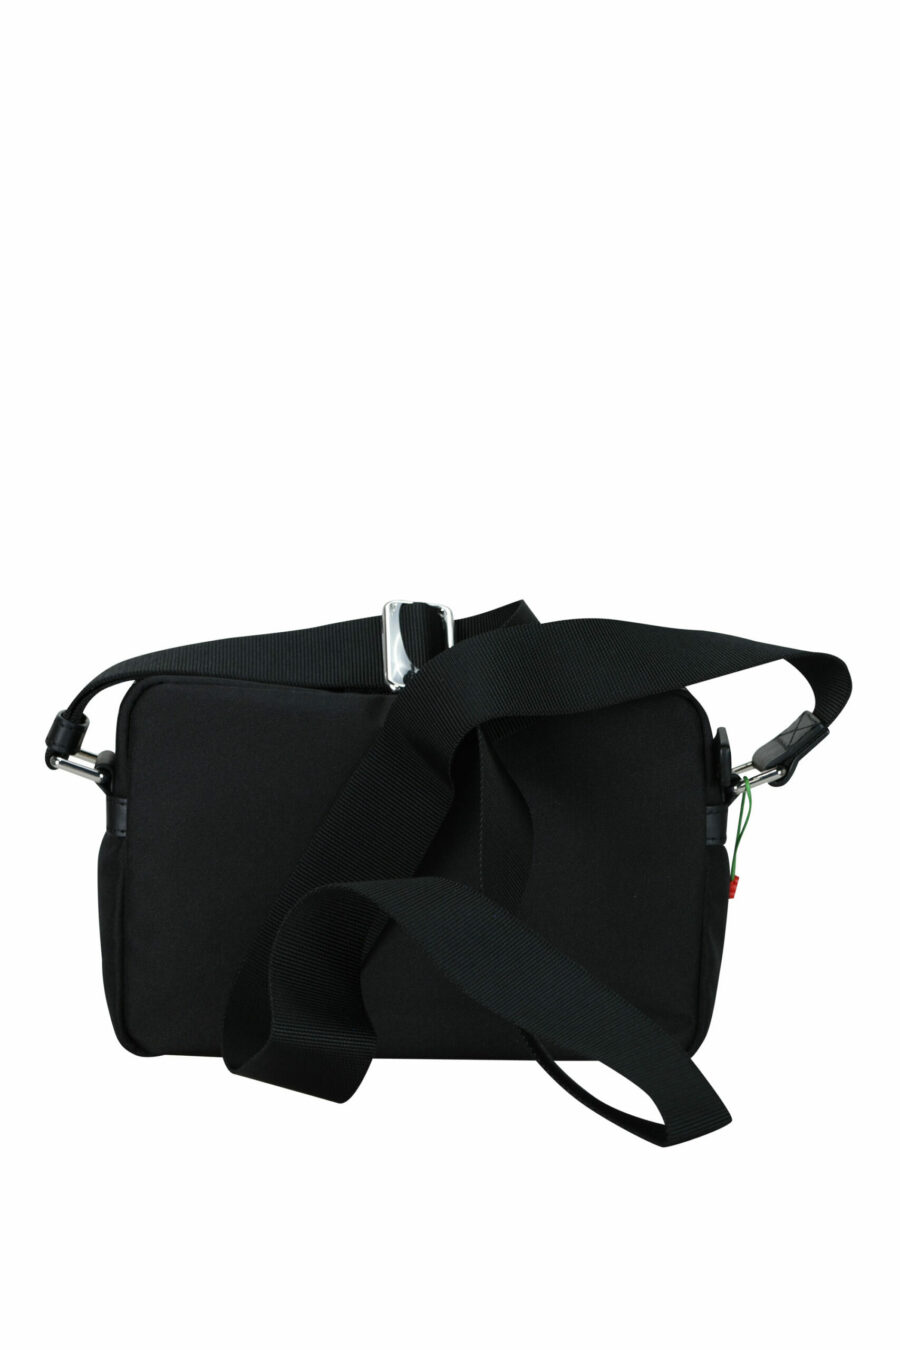 Black crossbody bag with "kenzography" logo - 3612230580084 2 scaled